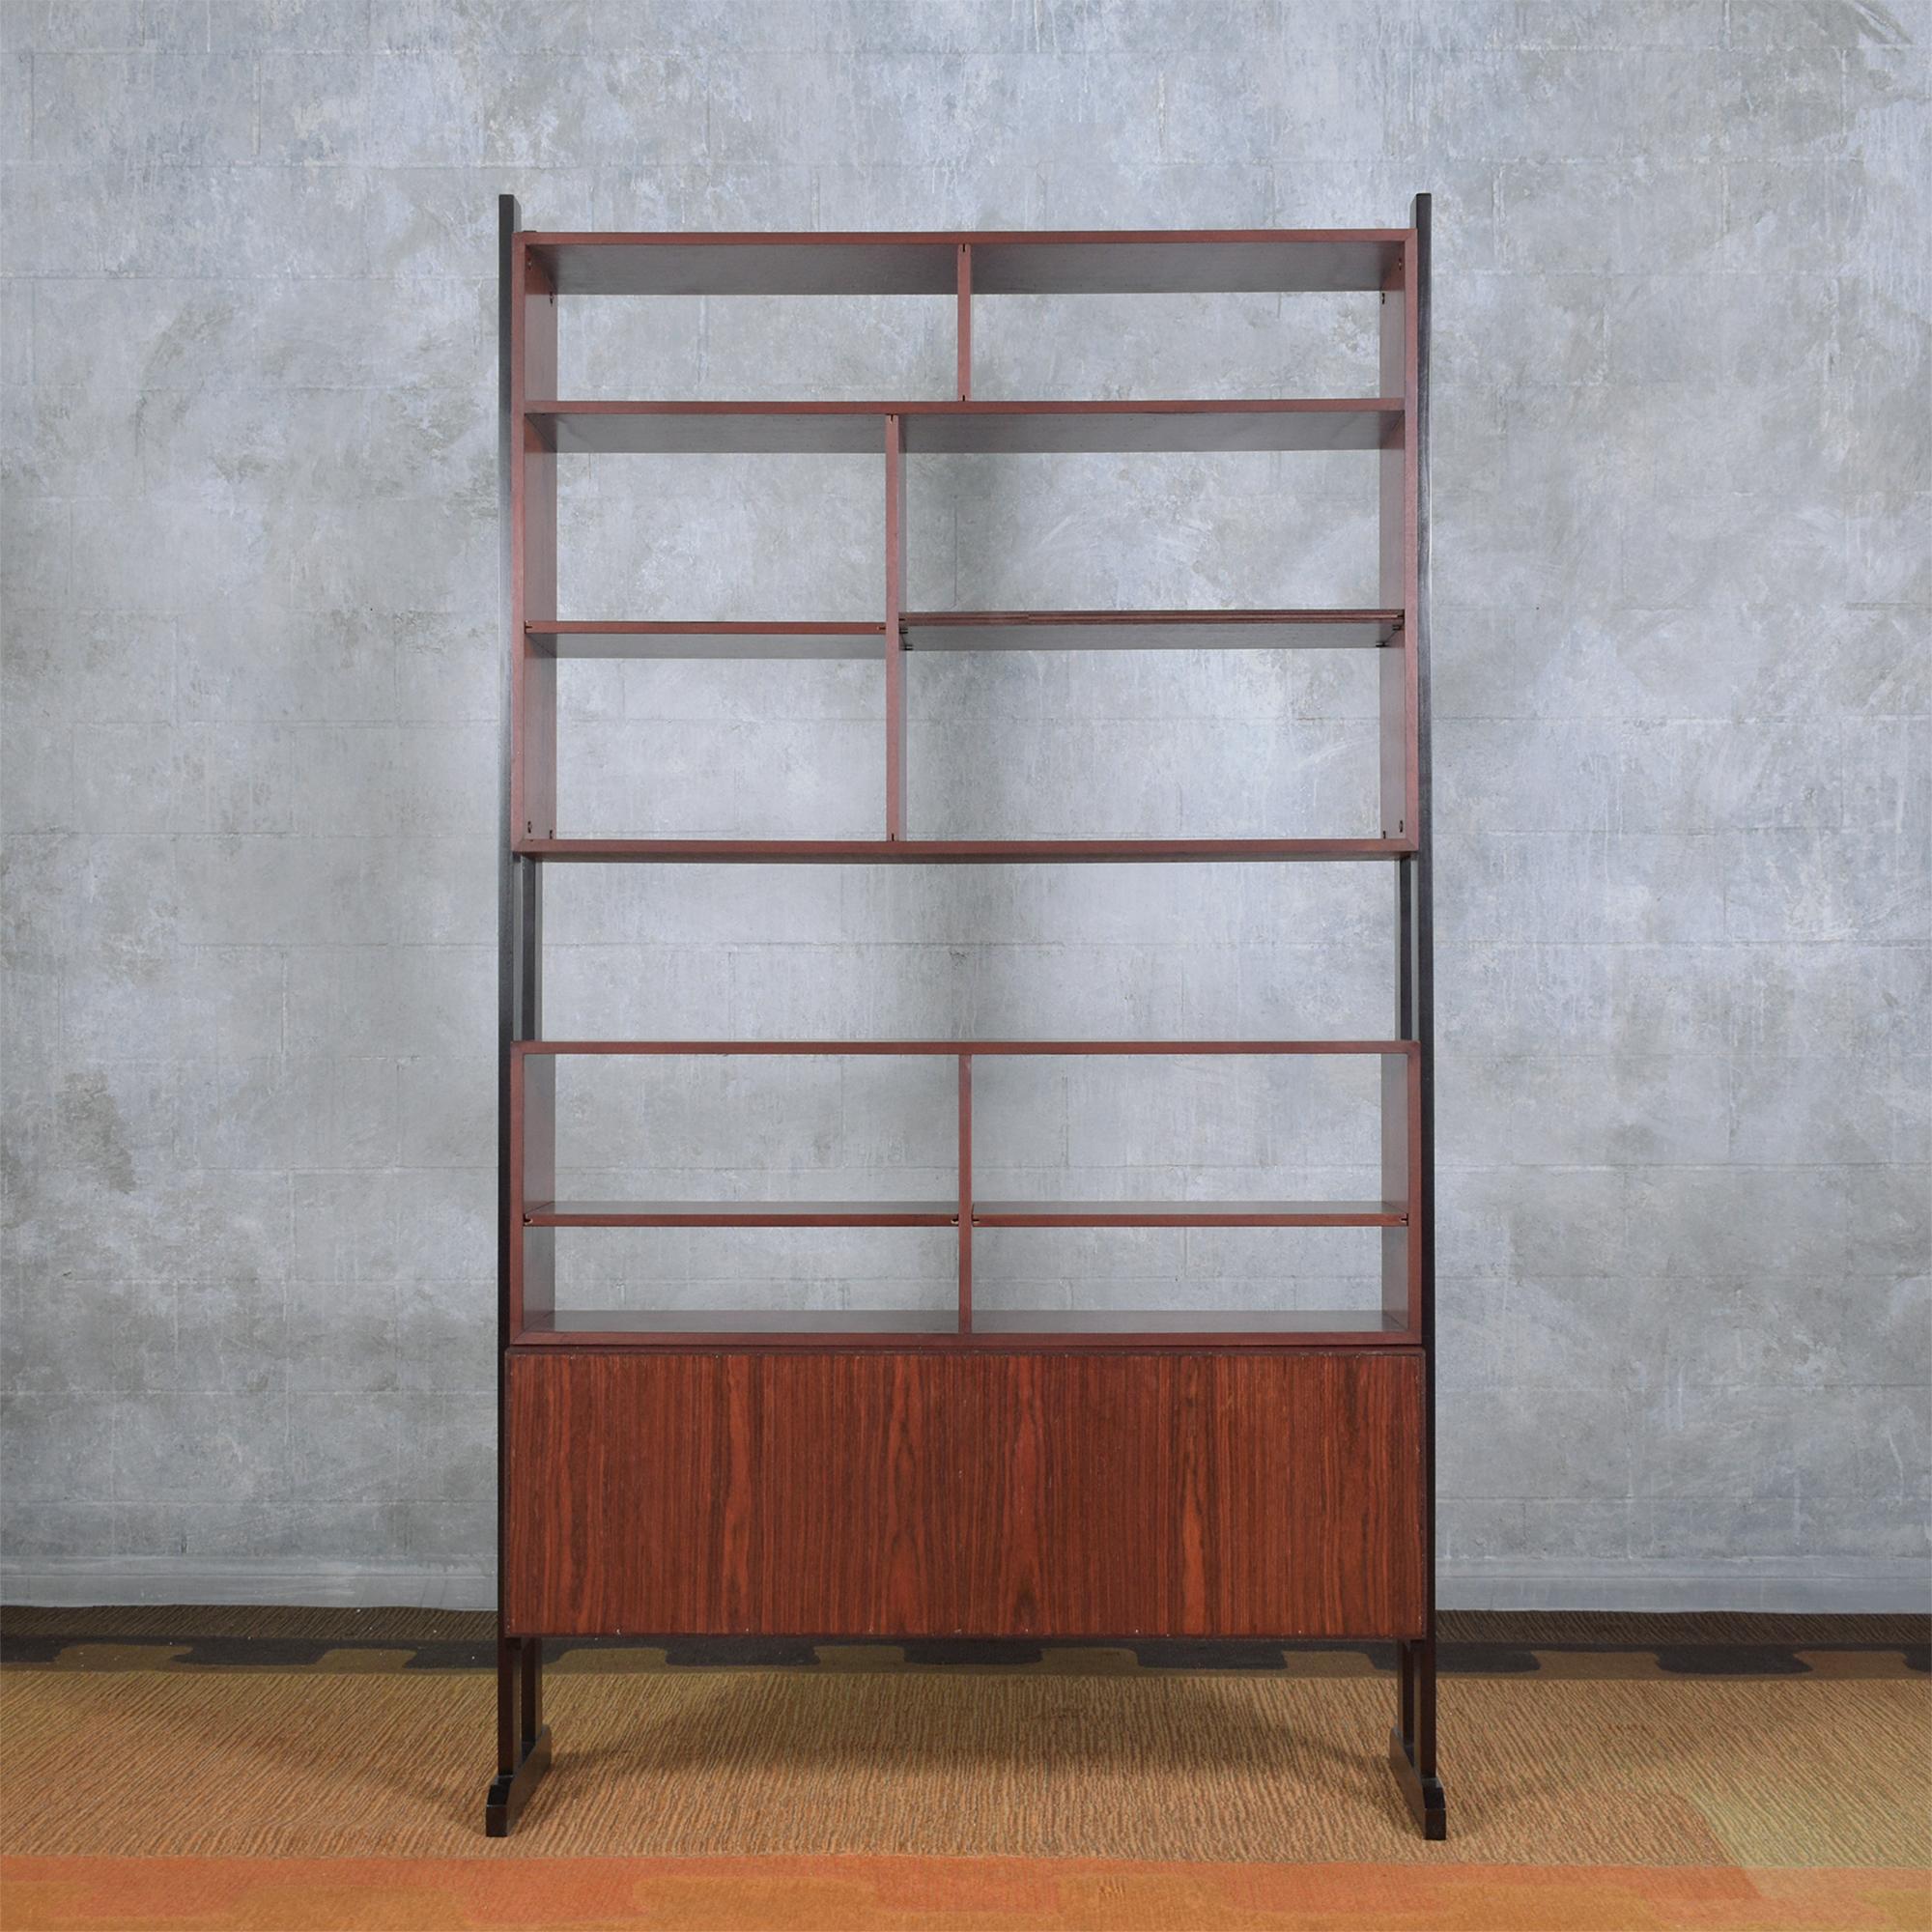 Danish Modern 1960s Rosewood Bookshelf: Vintage Elegance Meets Modern Function 1